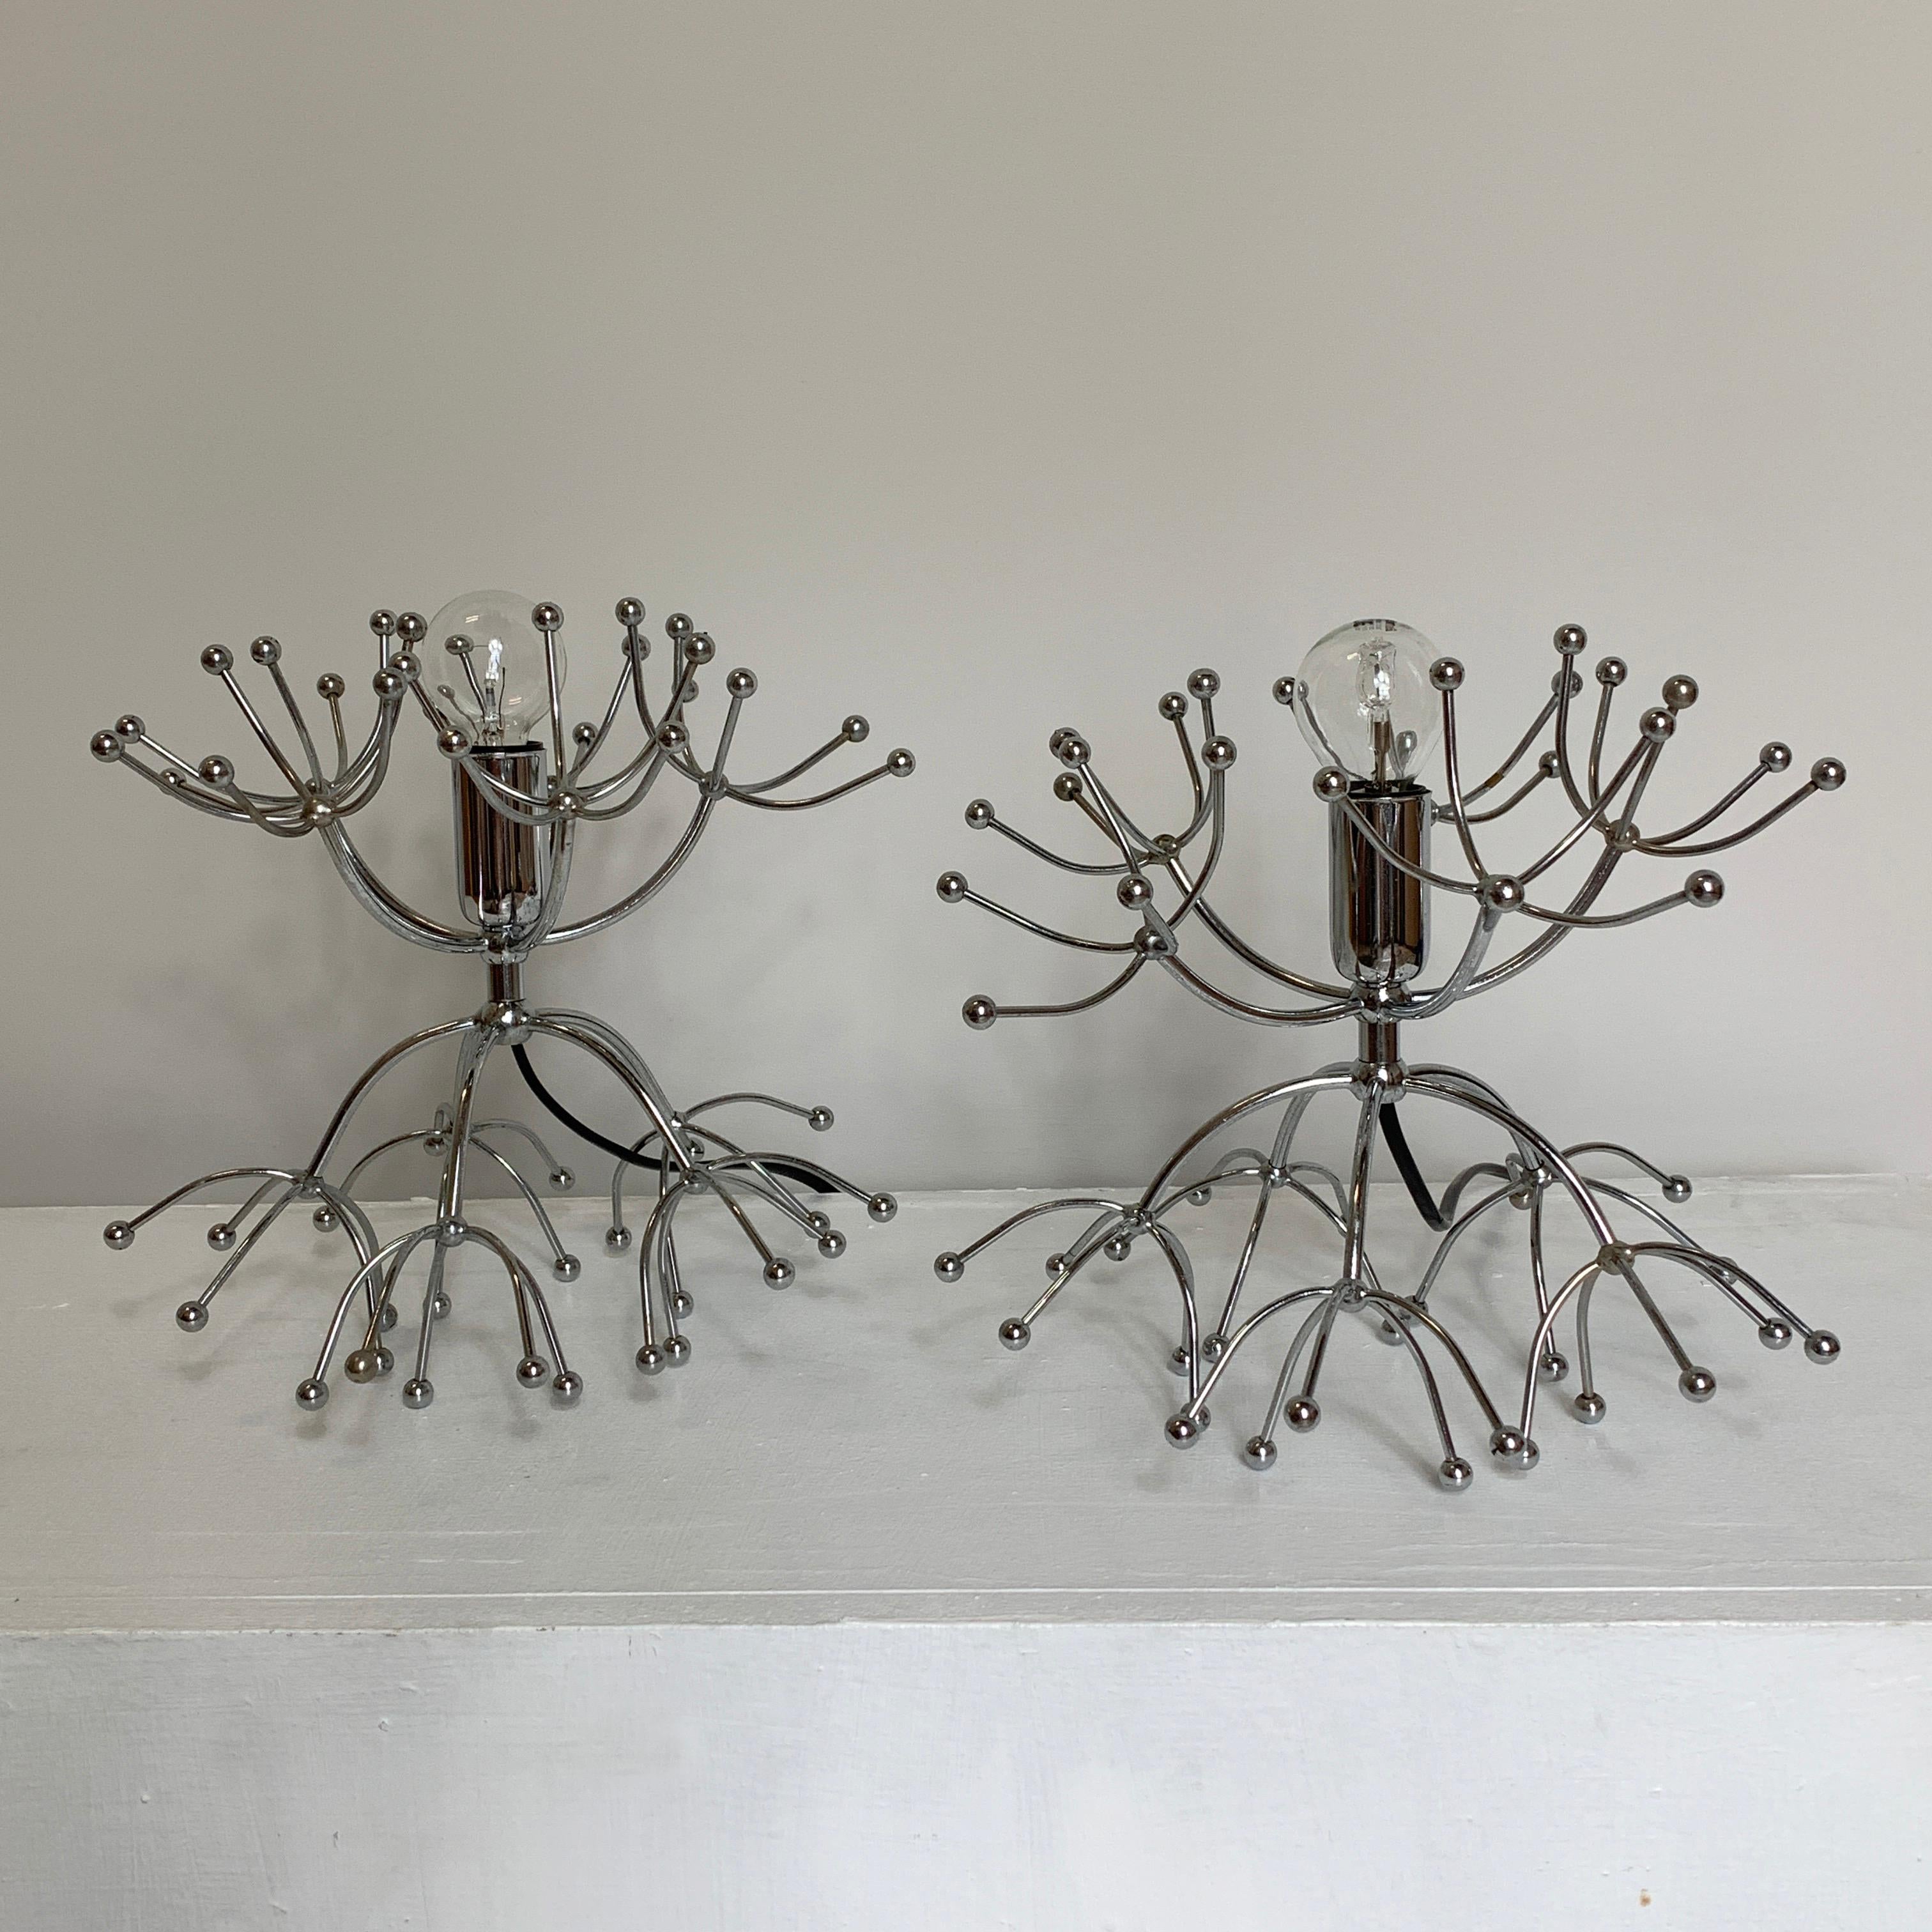 Plated Silver Gaetano Sciolari Sputnik Table Lamps, Italy, 1960s For Sale